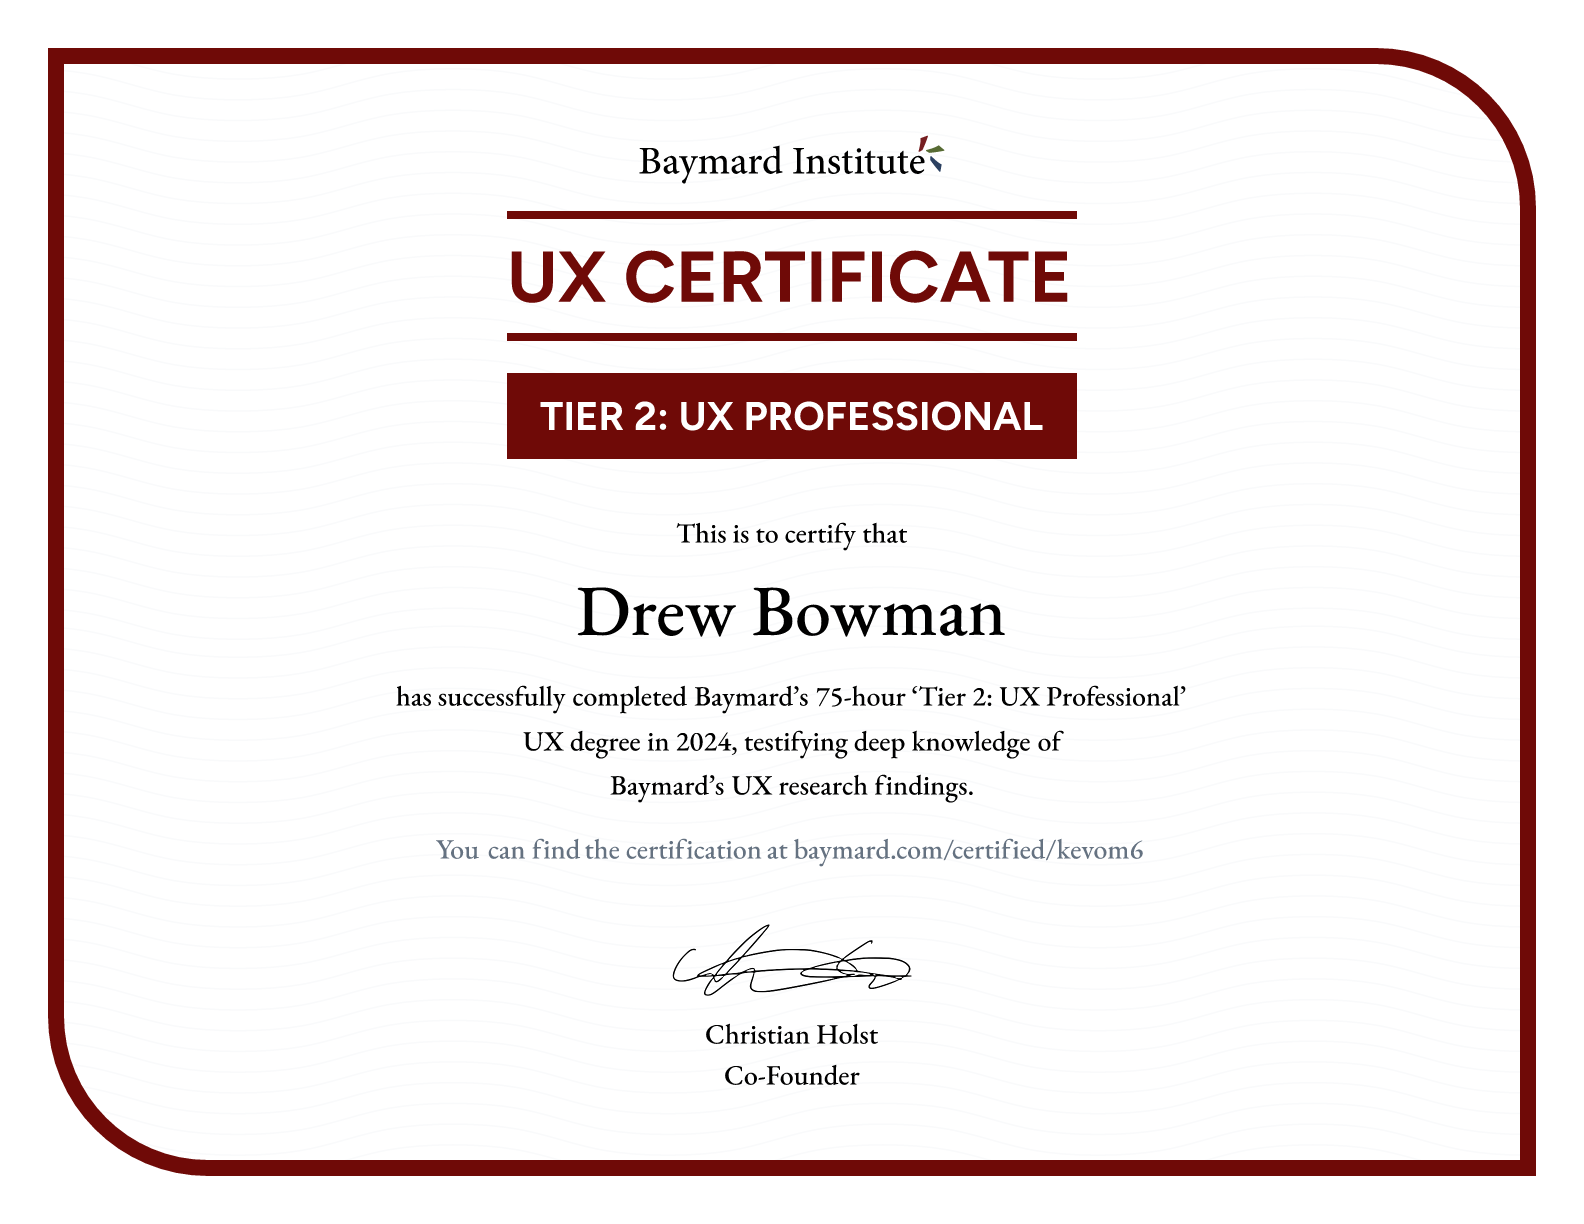 Drew Bowman’s certificate